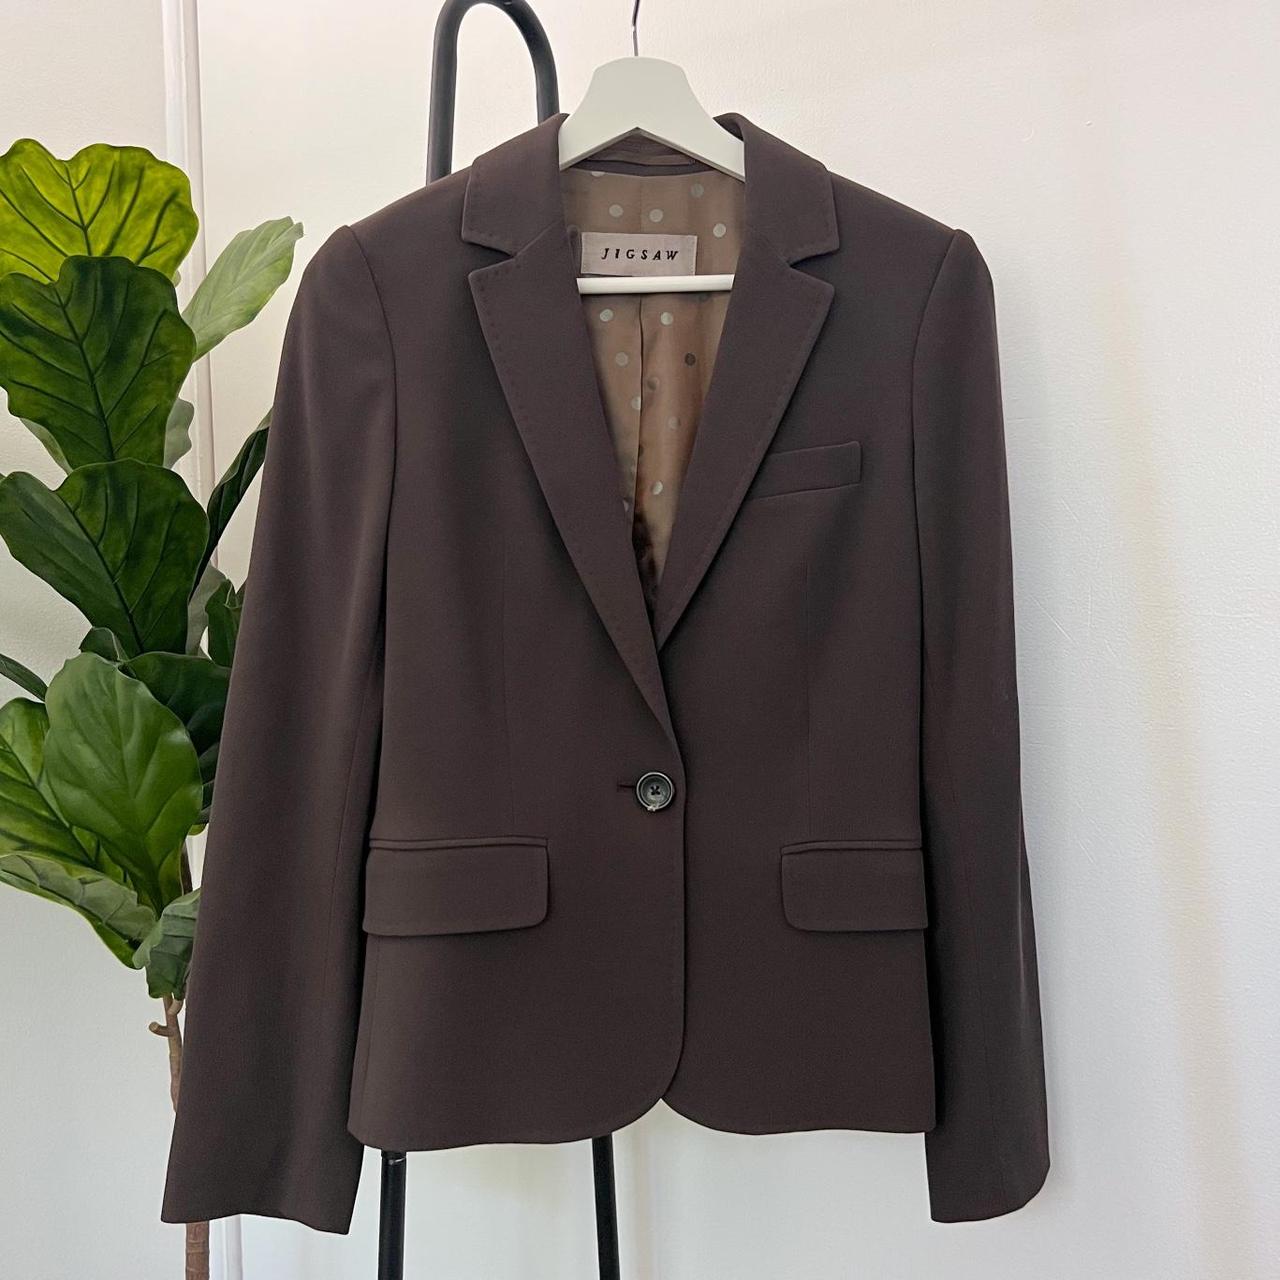 Product Image 1 - Brown Wool Blend Blazer

🤎 brown